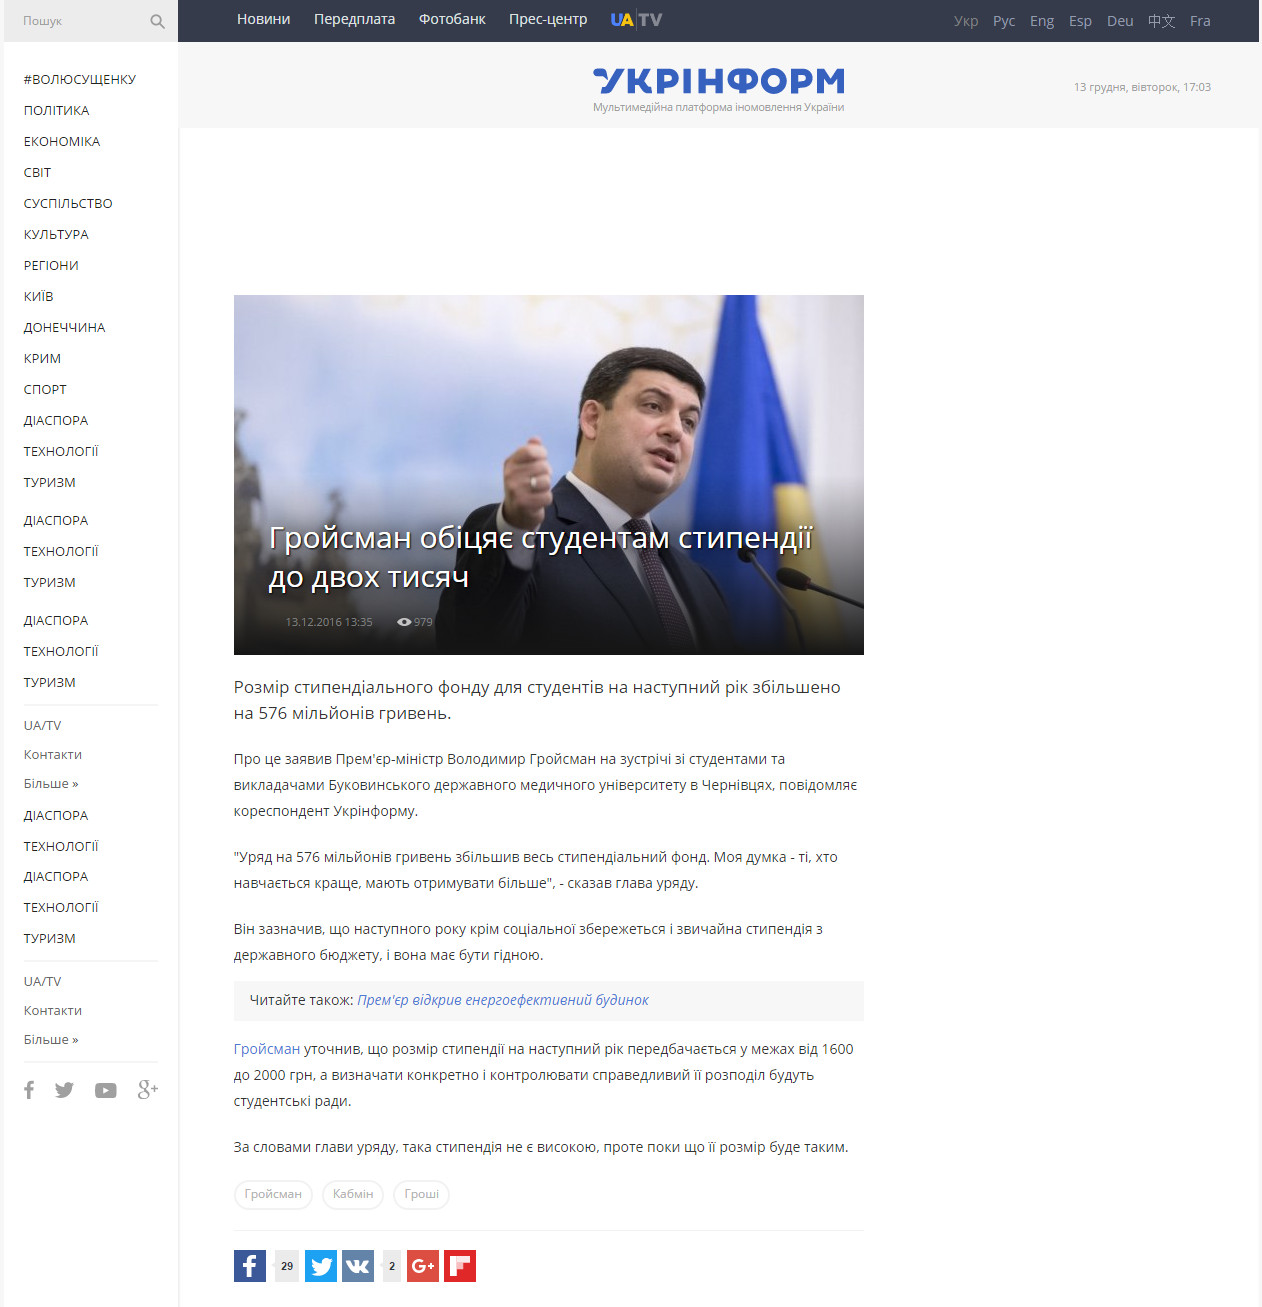 http://www.ukrinform.ua/rubric-economics/2138641-grojsman-obicae-studentam-stipendii-do-dvoh-tisac.html